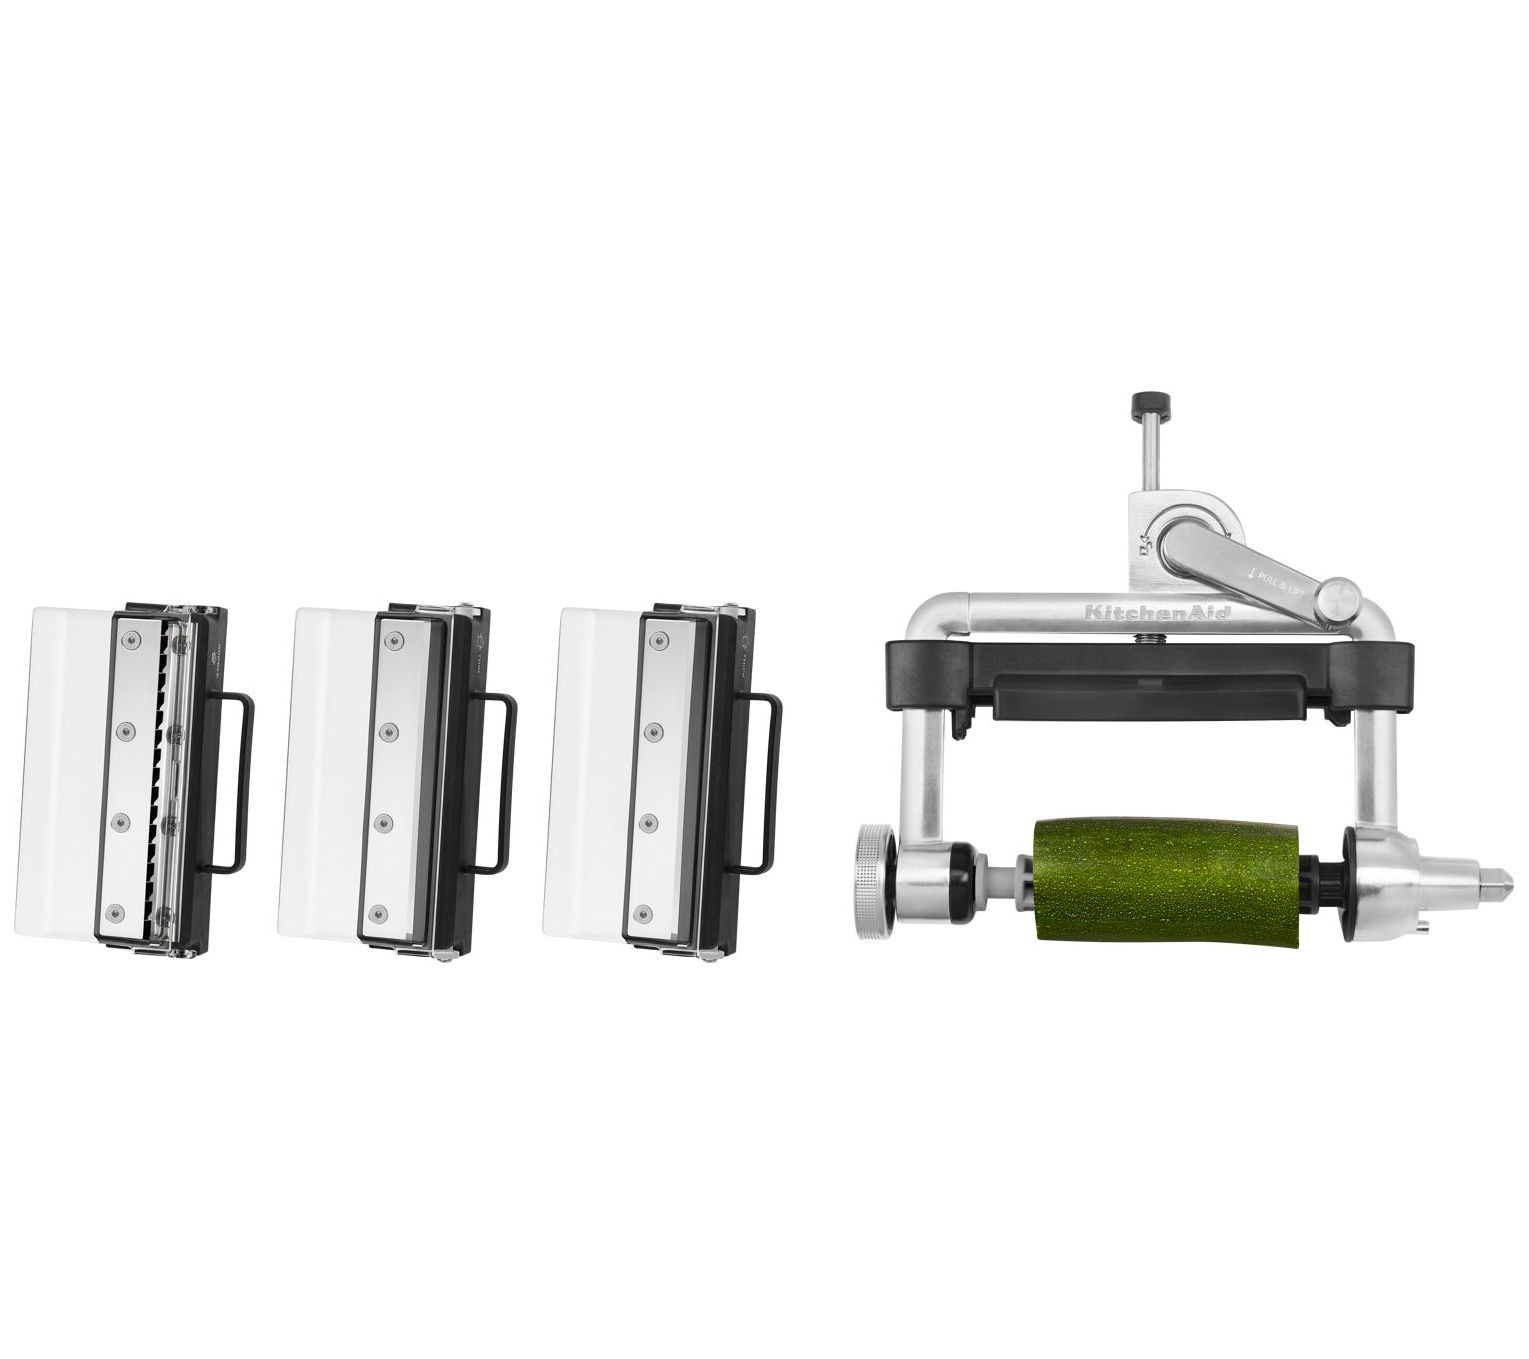 KitchenAid Sheet Cutter Stand Mixer Attachment on QVC 